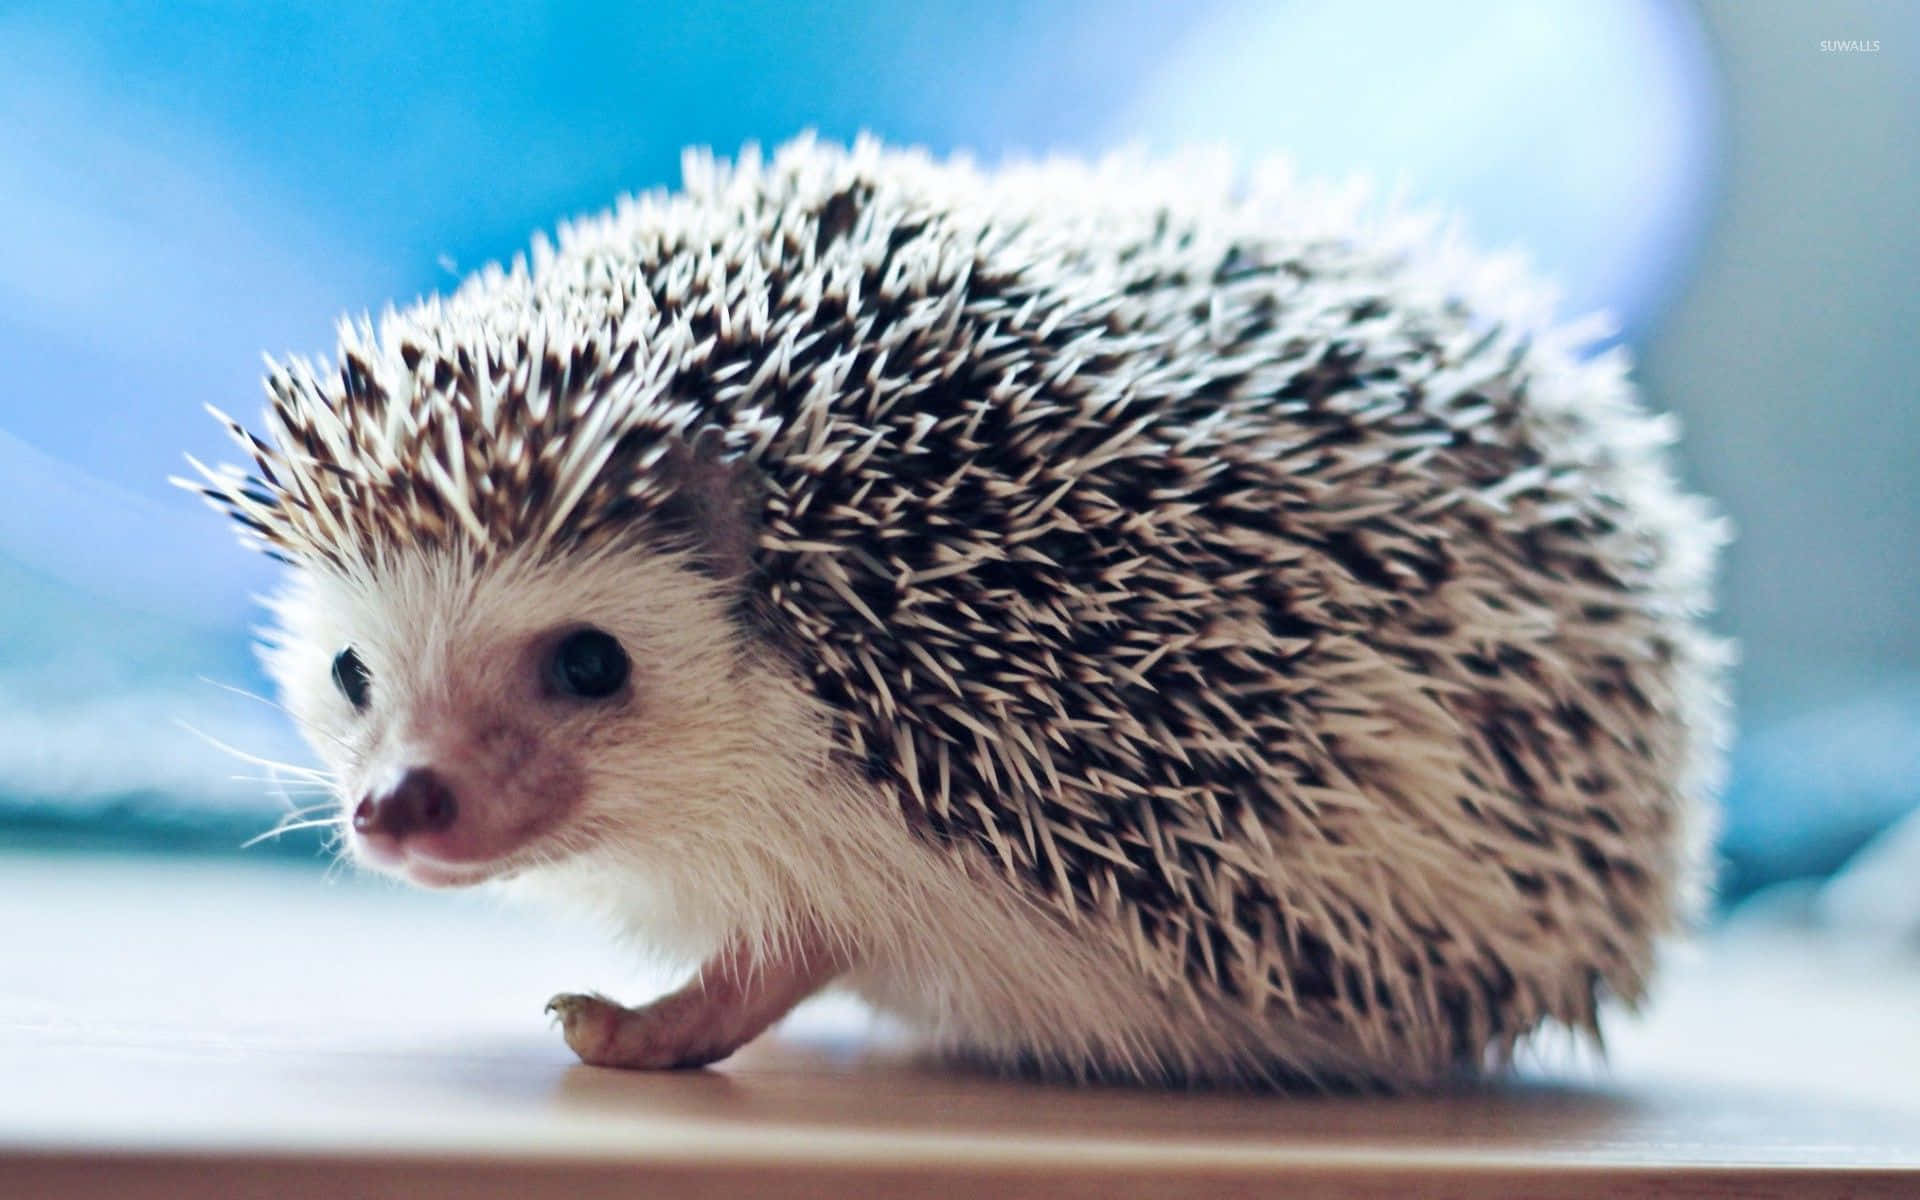 Adorable Hedgehog in Natural Habitat